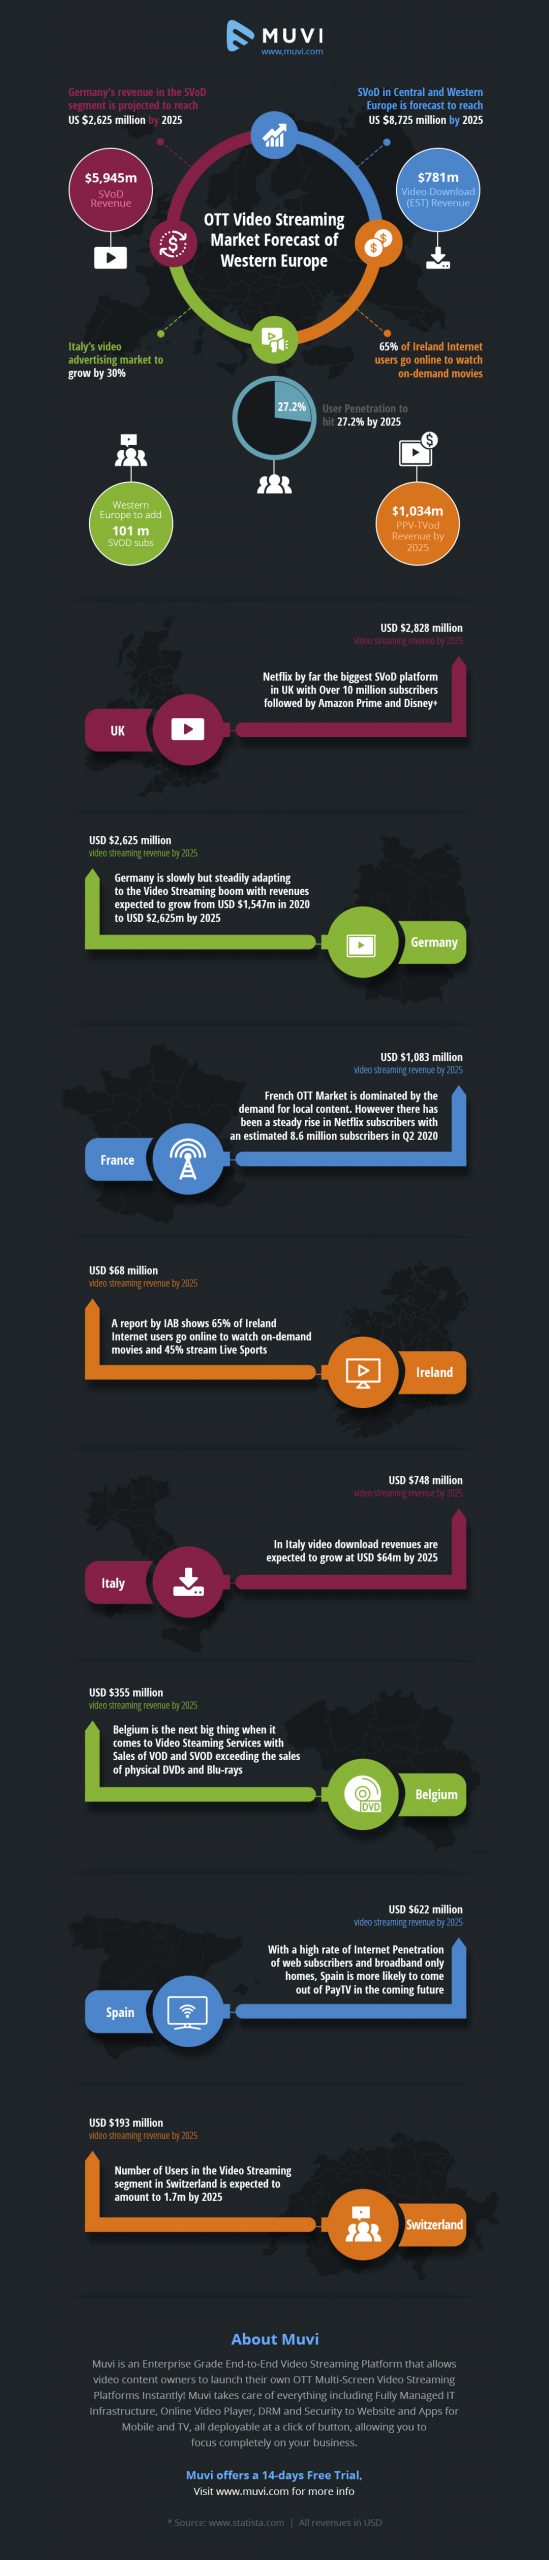 Infographic OTT Video Streaming Market Forecast for Western Europe